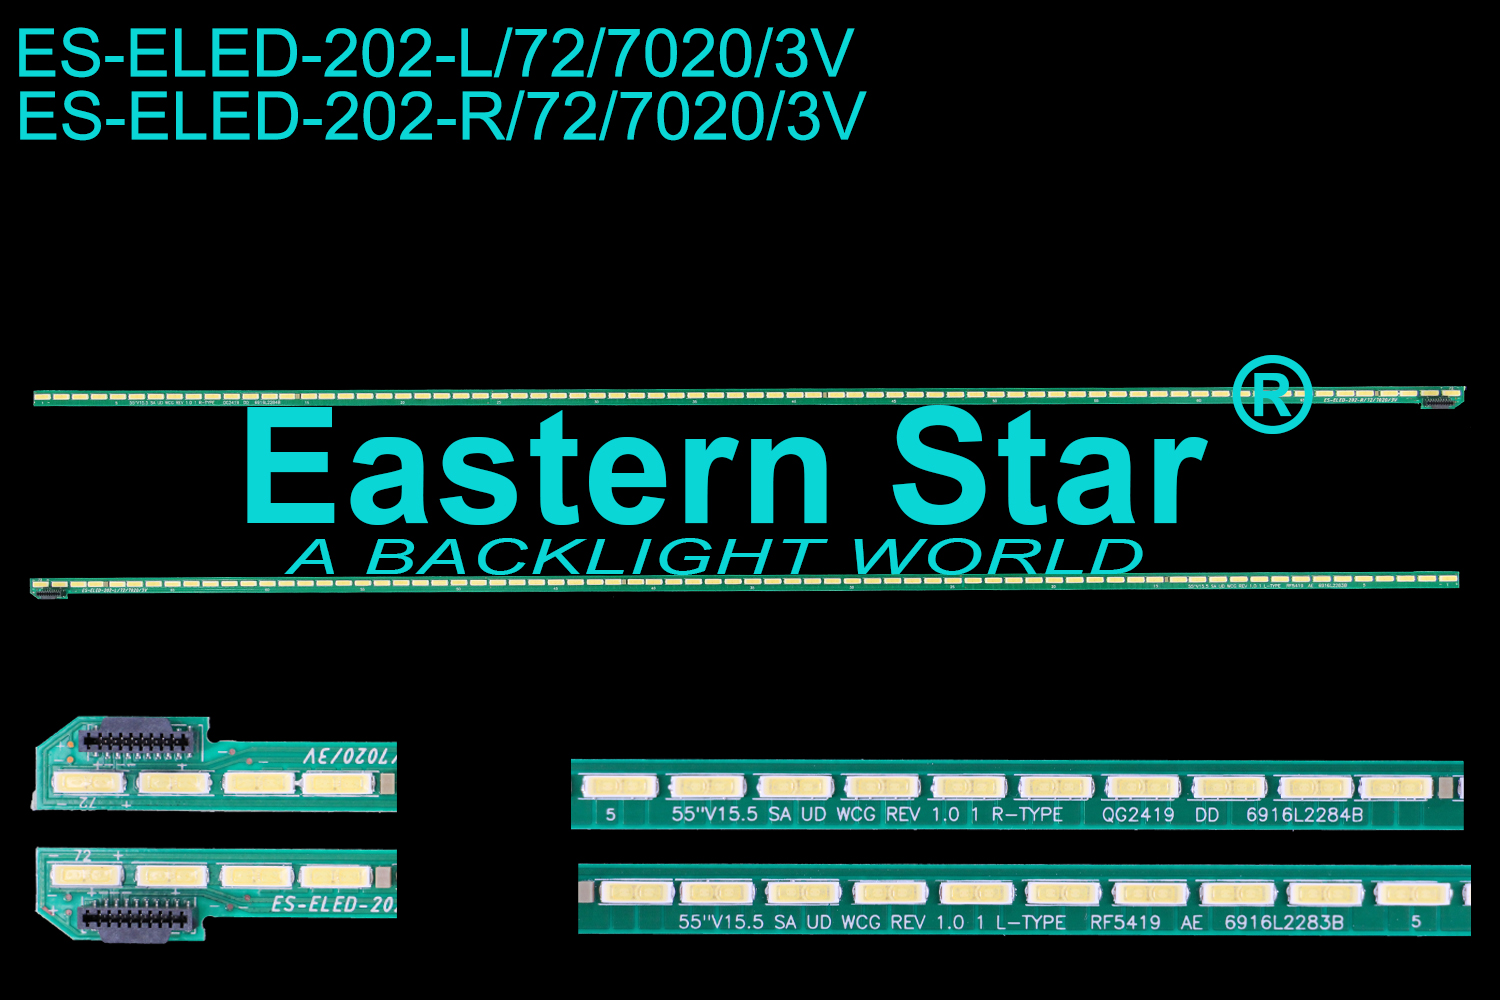 ES-ELED-202 ELED/EDGE TV backlight 55" use for Lg L: 55" V15.5 SA UD WCG REV 1.0 1 L-TYPE 6916L 2283B  R: 55" V15.5 SA UD WCG REV 1.0 1 R-TYPE 6916L 2284B (2)